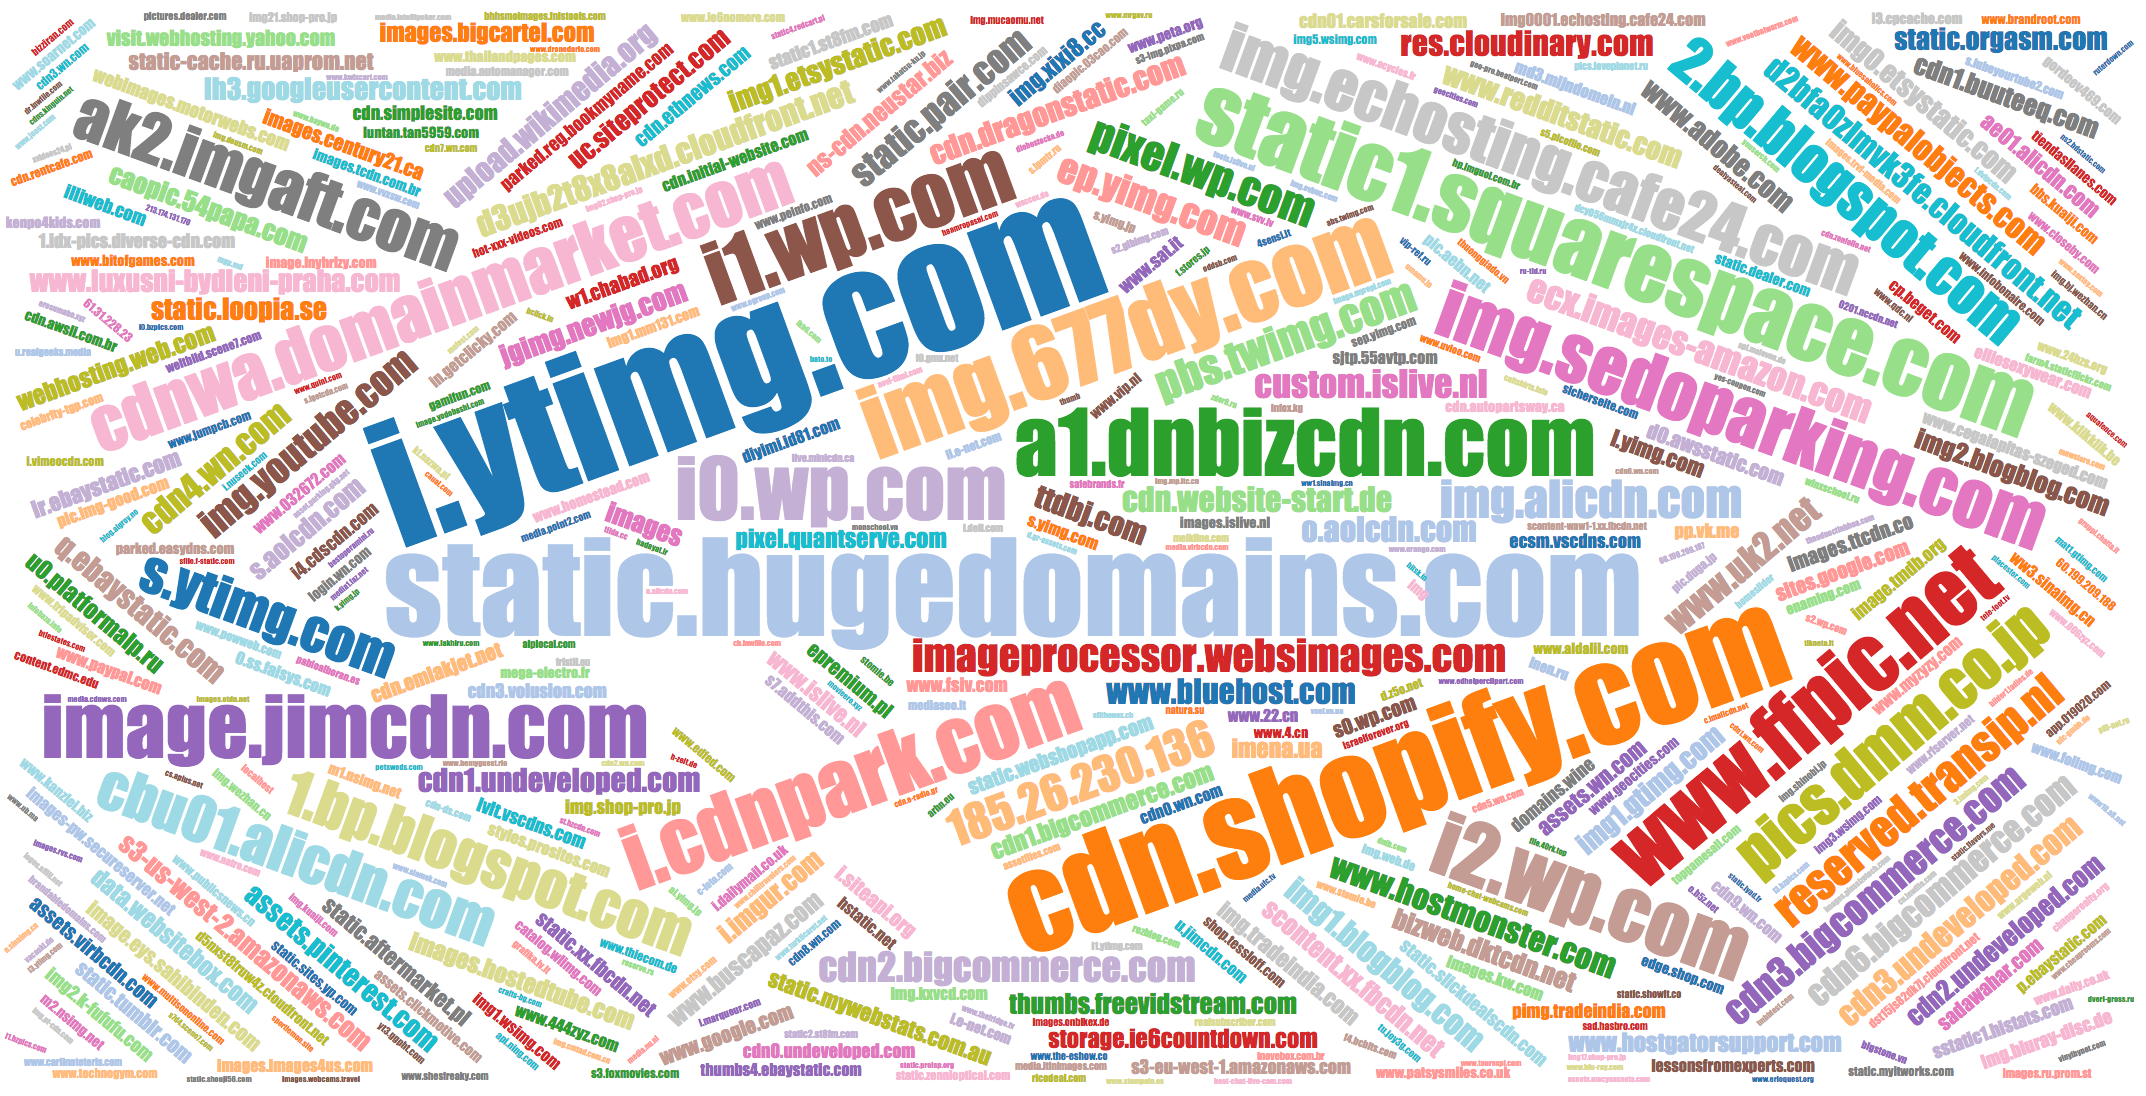 Popular names of IMG domains www.1905ziyuan.com, www.domainmarket.com, etc.